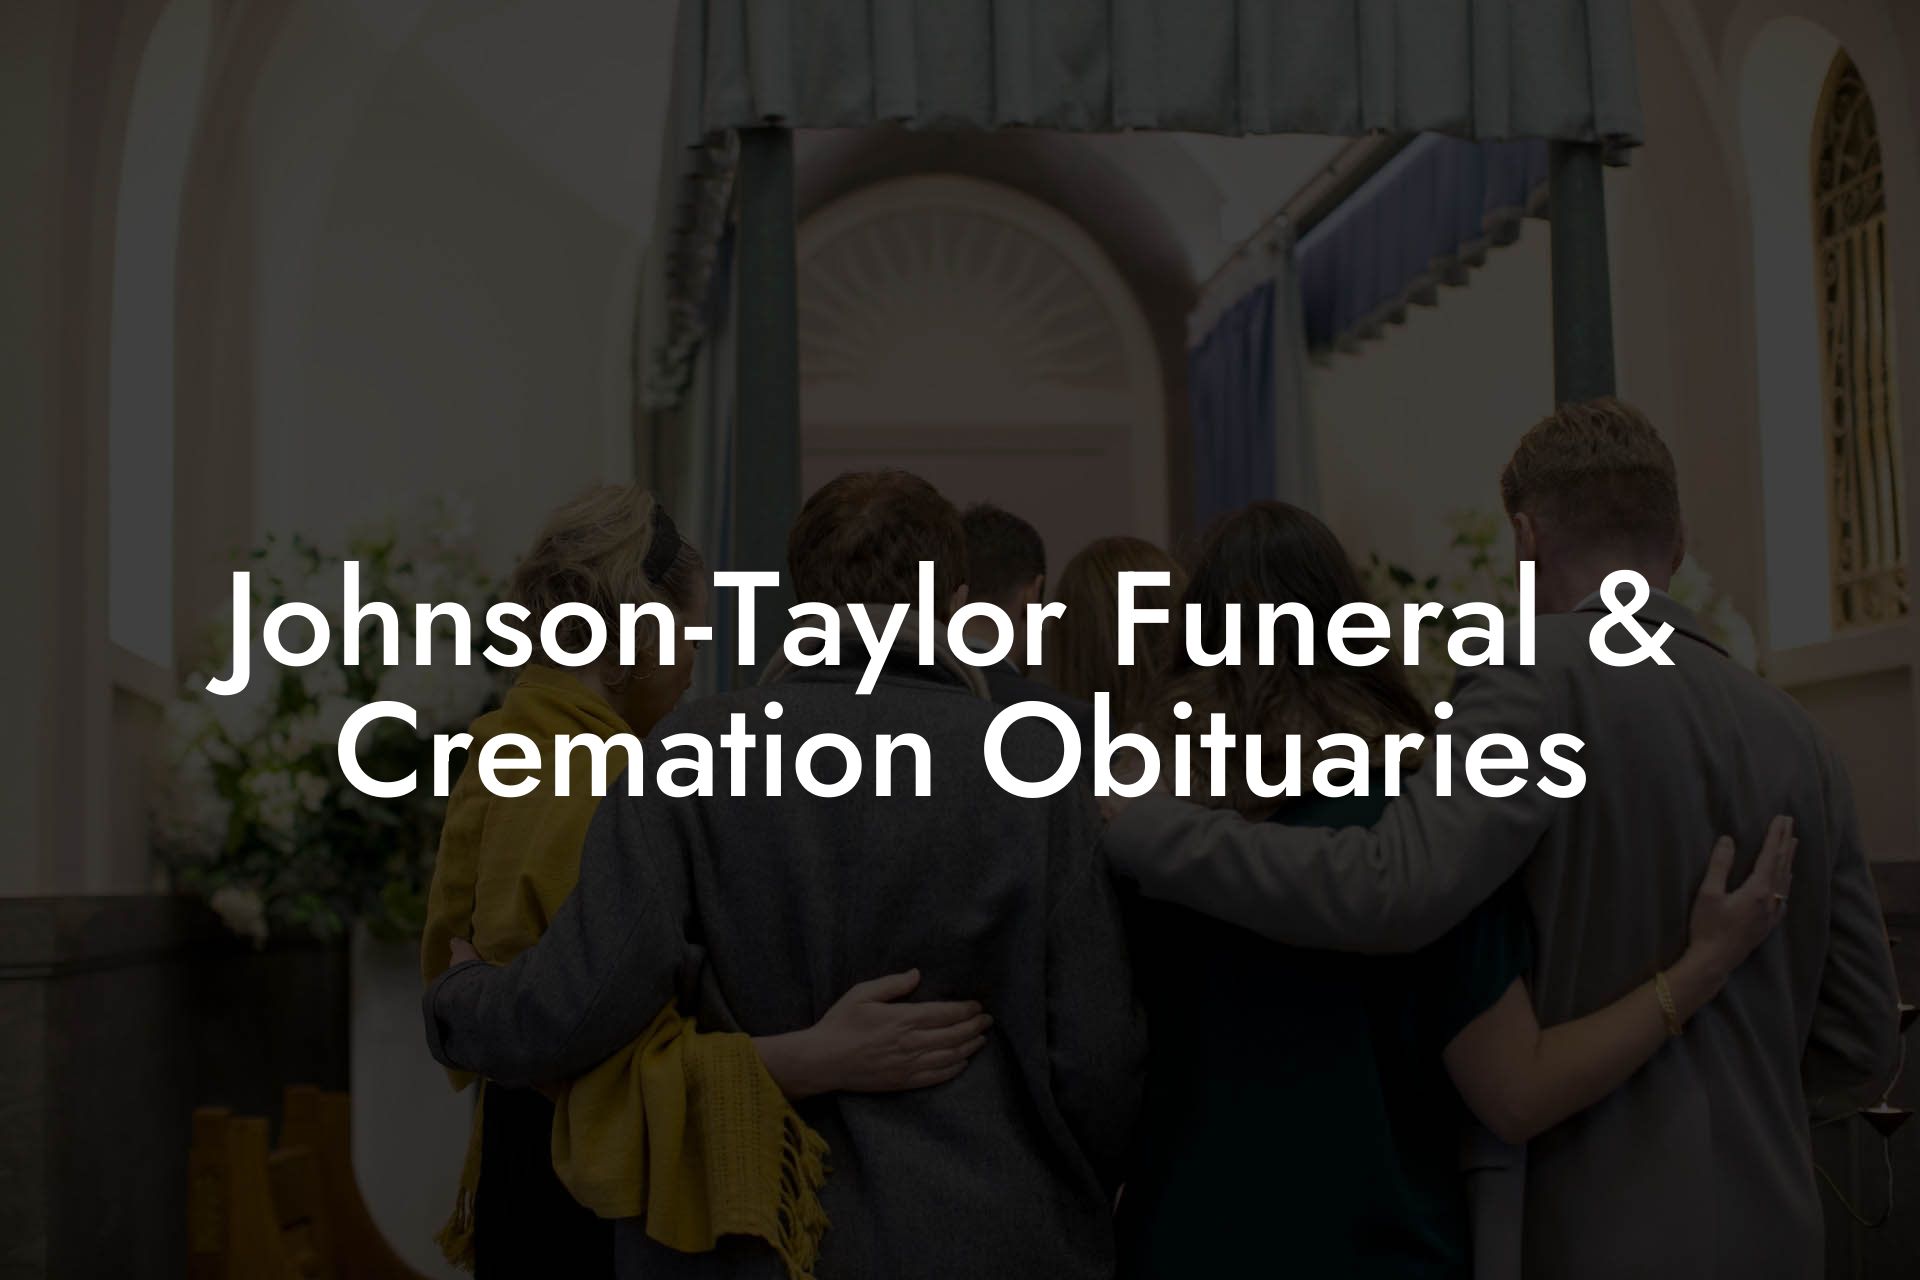 Johnson-Taylor Funeral & Cremation Obituaries